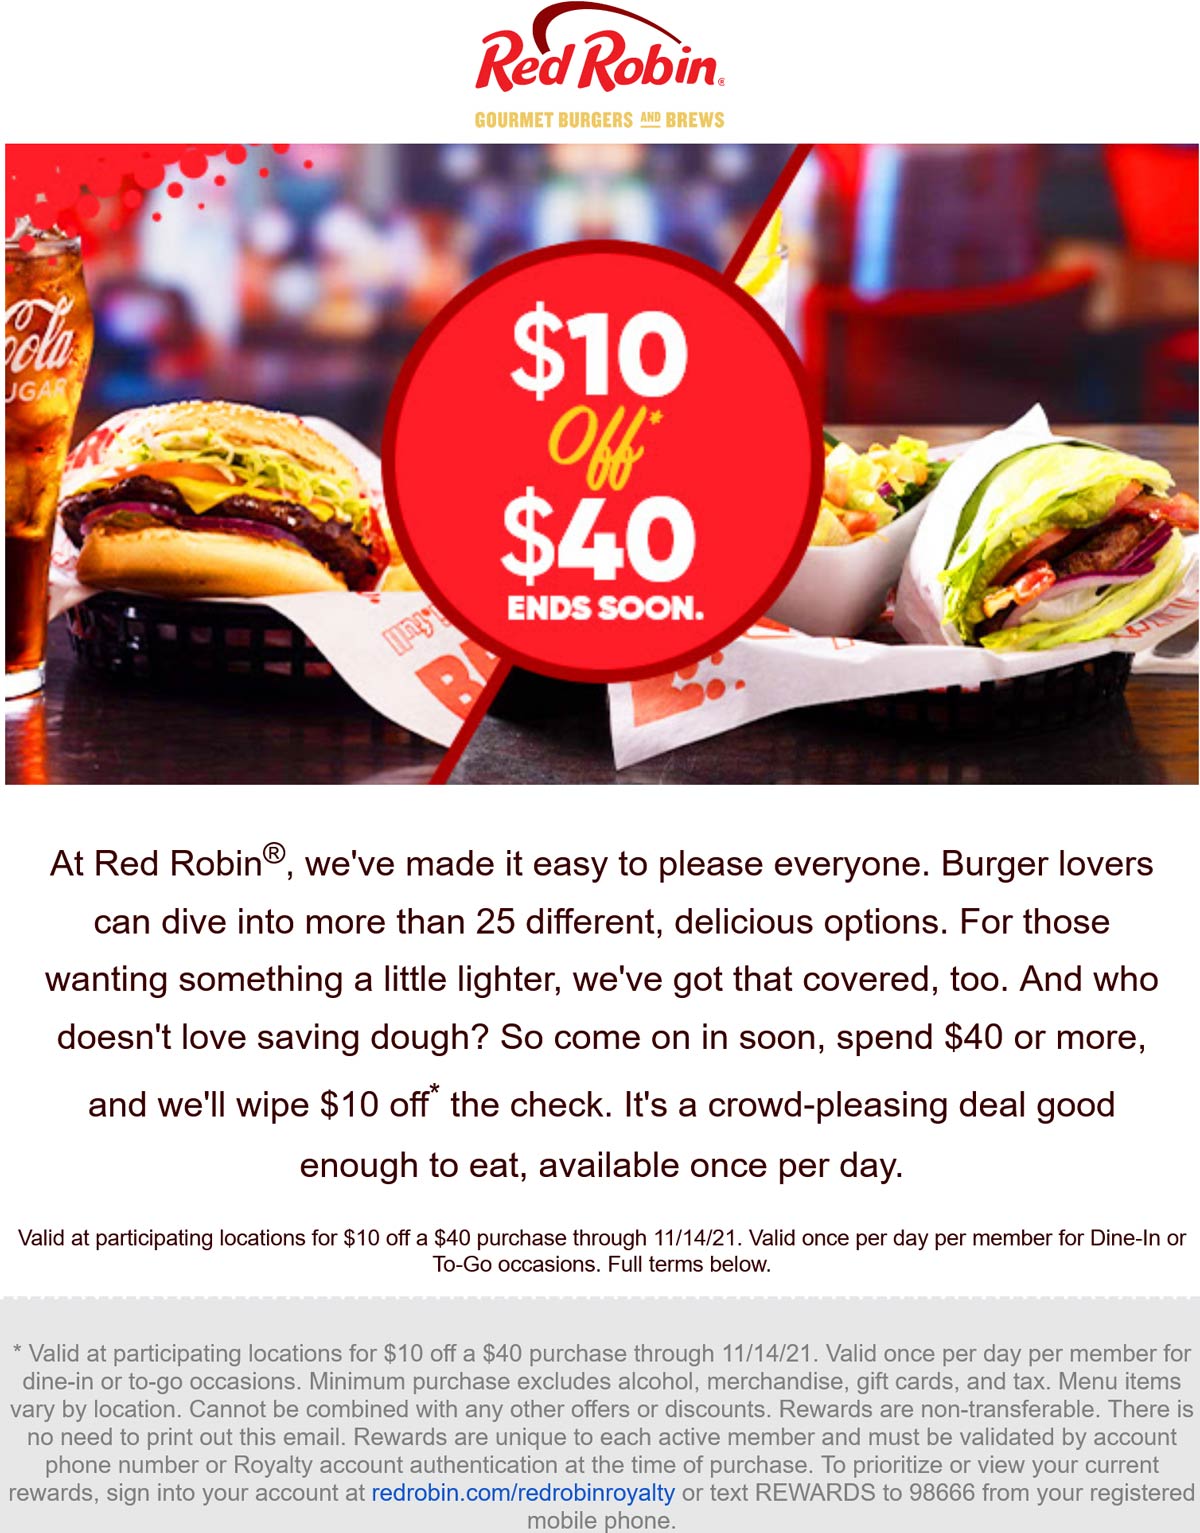 Red Robin restaurants Coupon  $10 off $40 for rewards at Red Robin restaurants #redrobin 